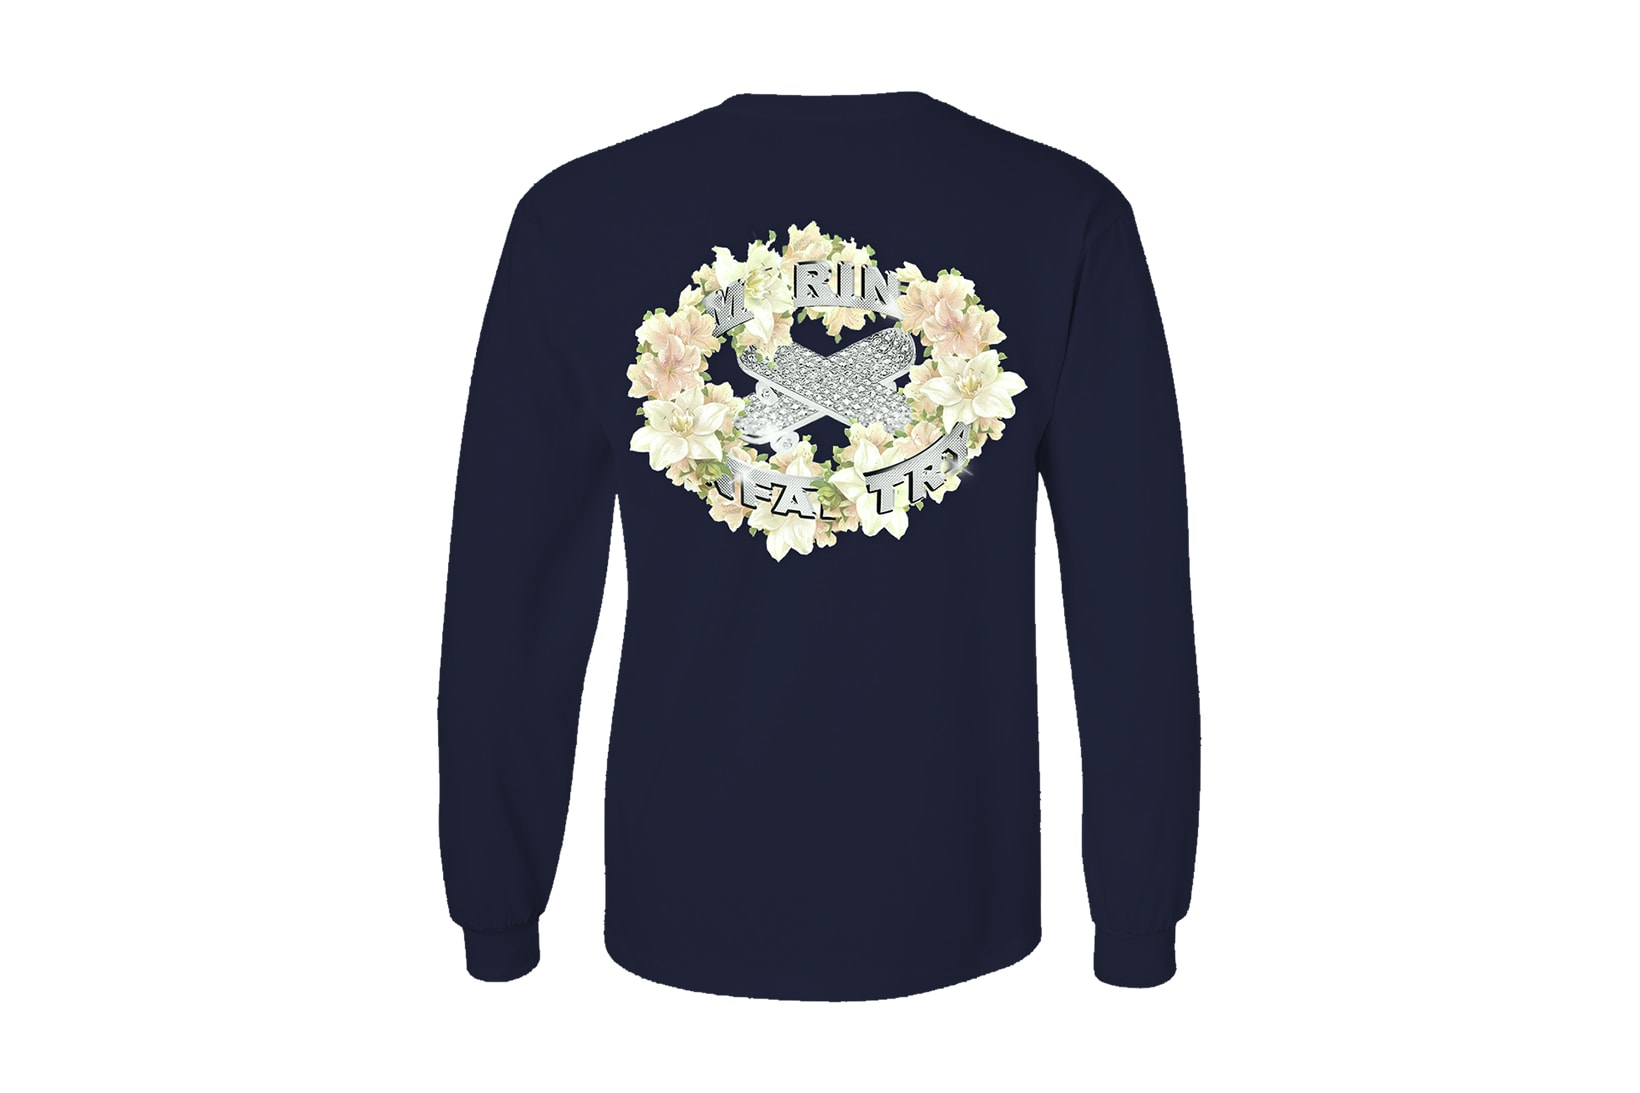 Marino Infantry Skull Logo Floral Logo t-shirt sweatpants fashion february 2018 ASAP Ant clothing clothes